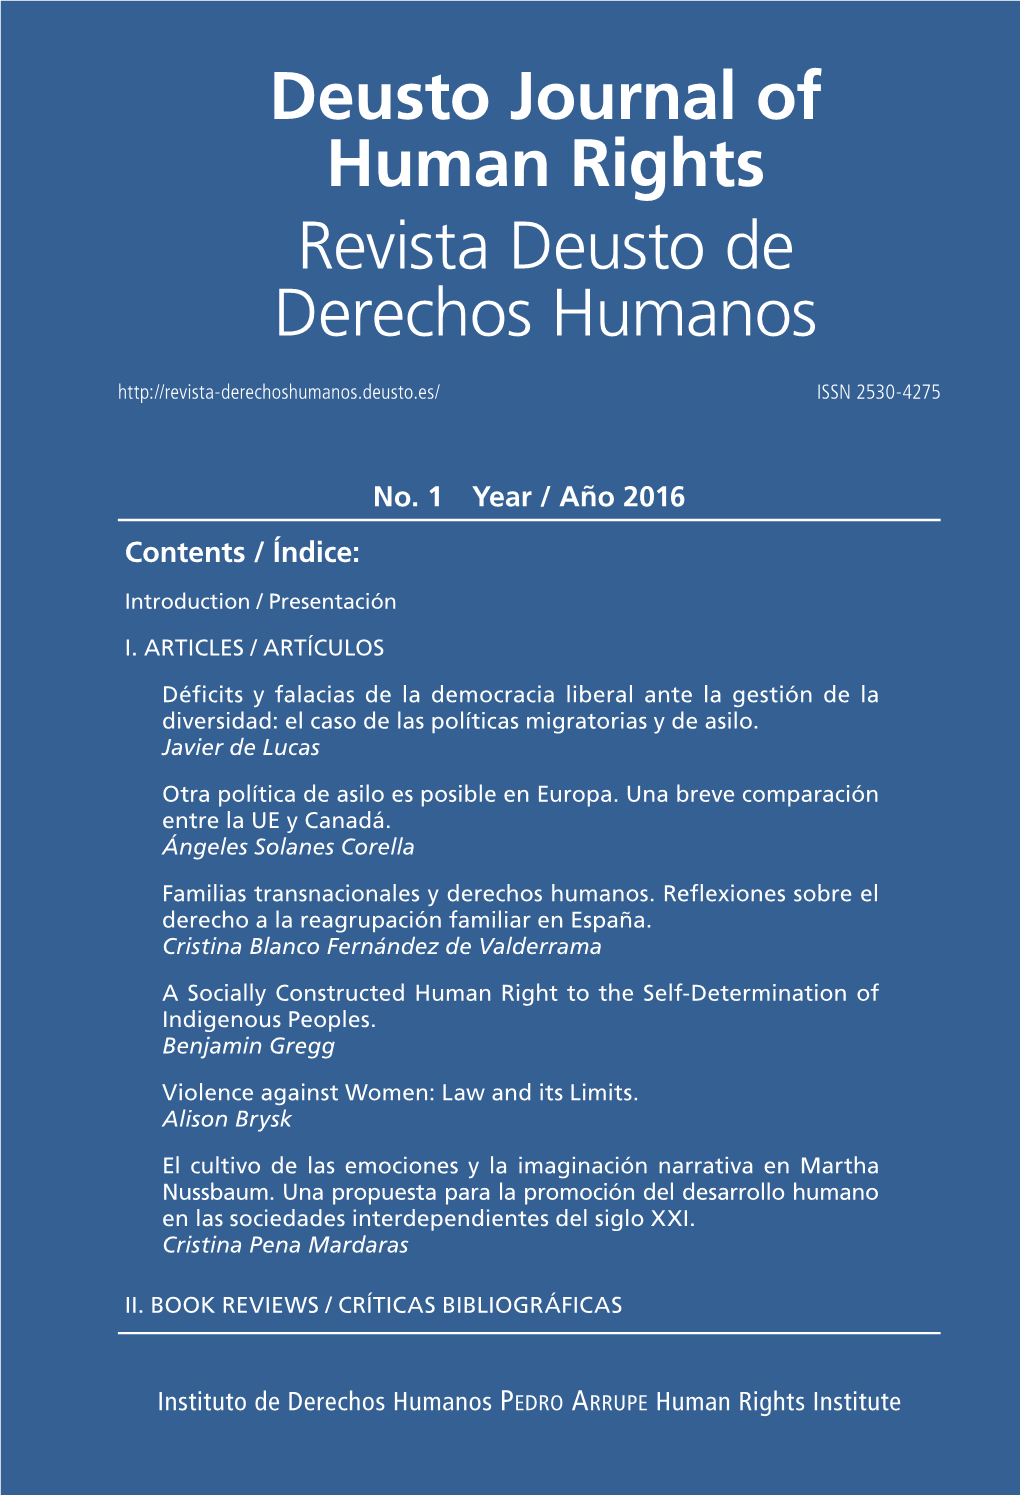 Deusto Journal of Human Rights / Revista Deusto De Derechos